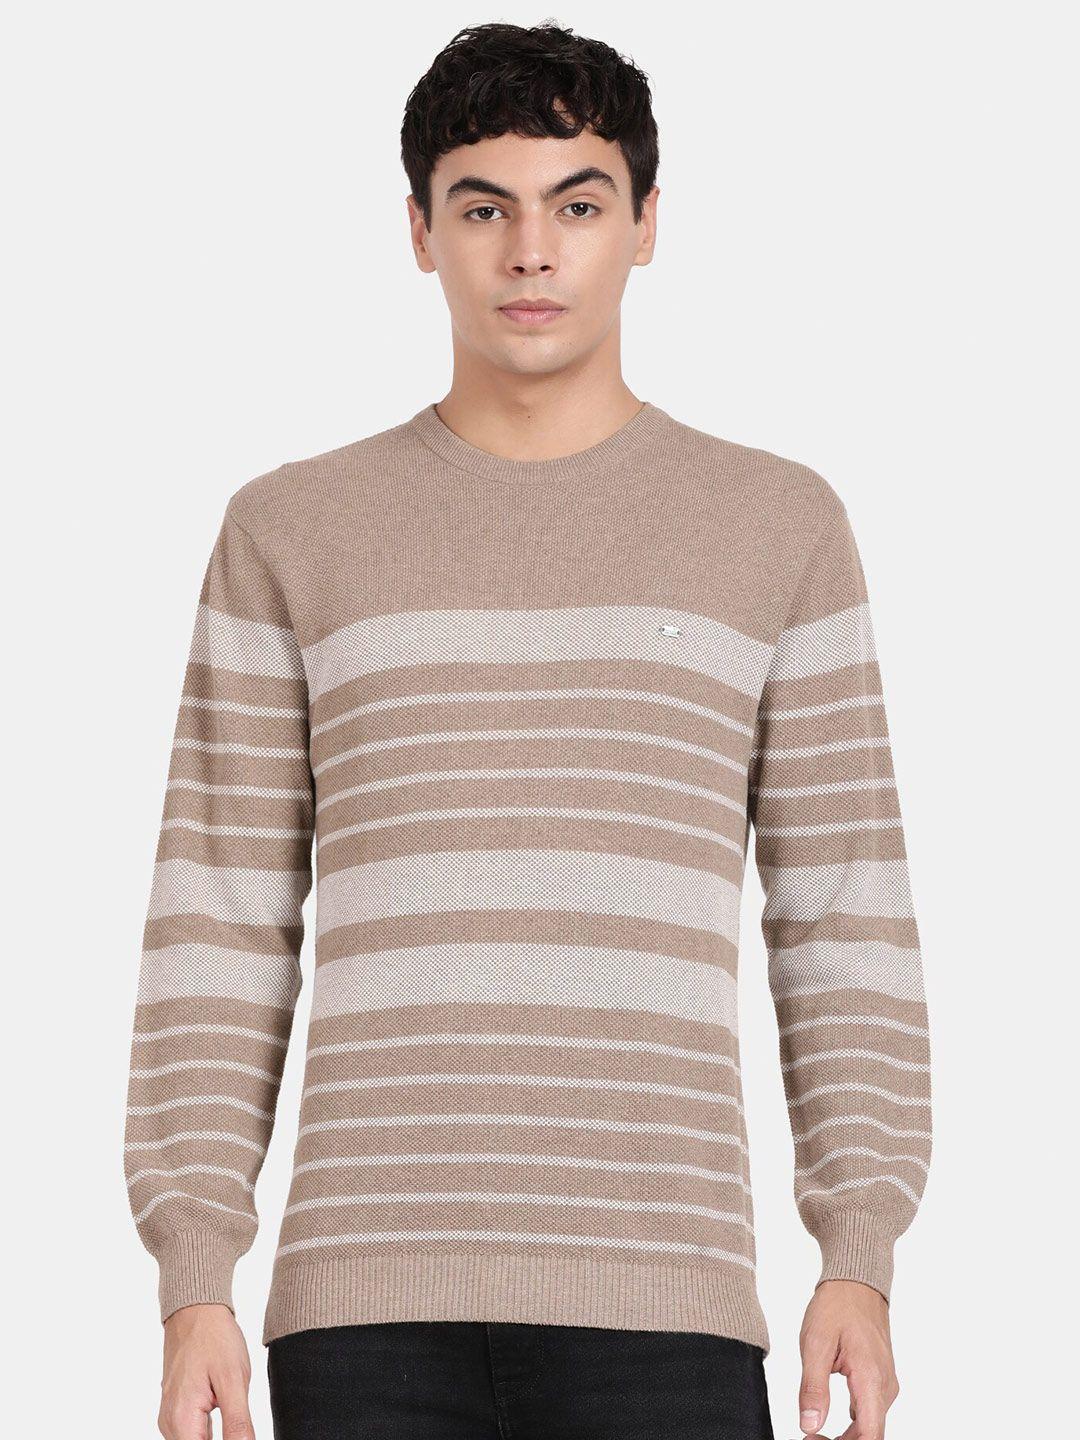 t-base striped cotton pullover sweatshirt